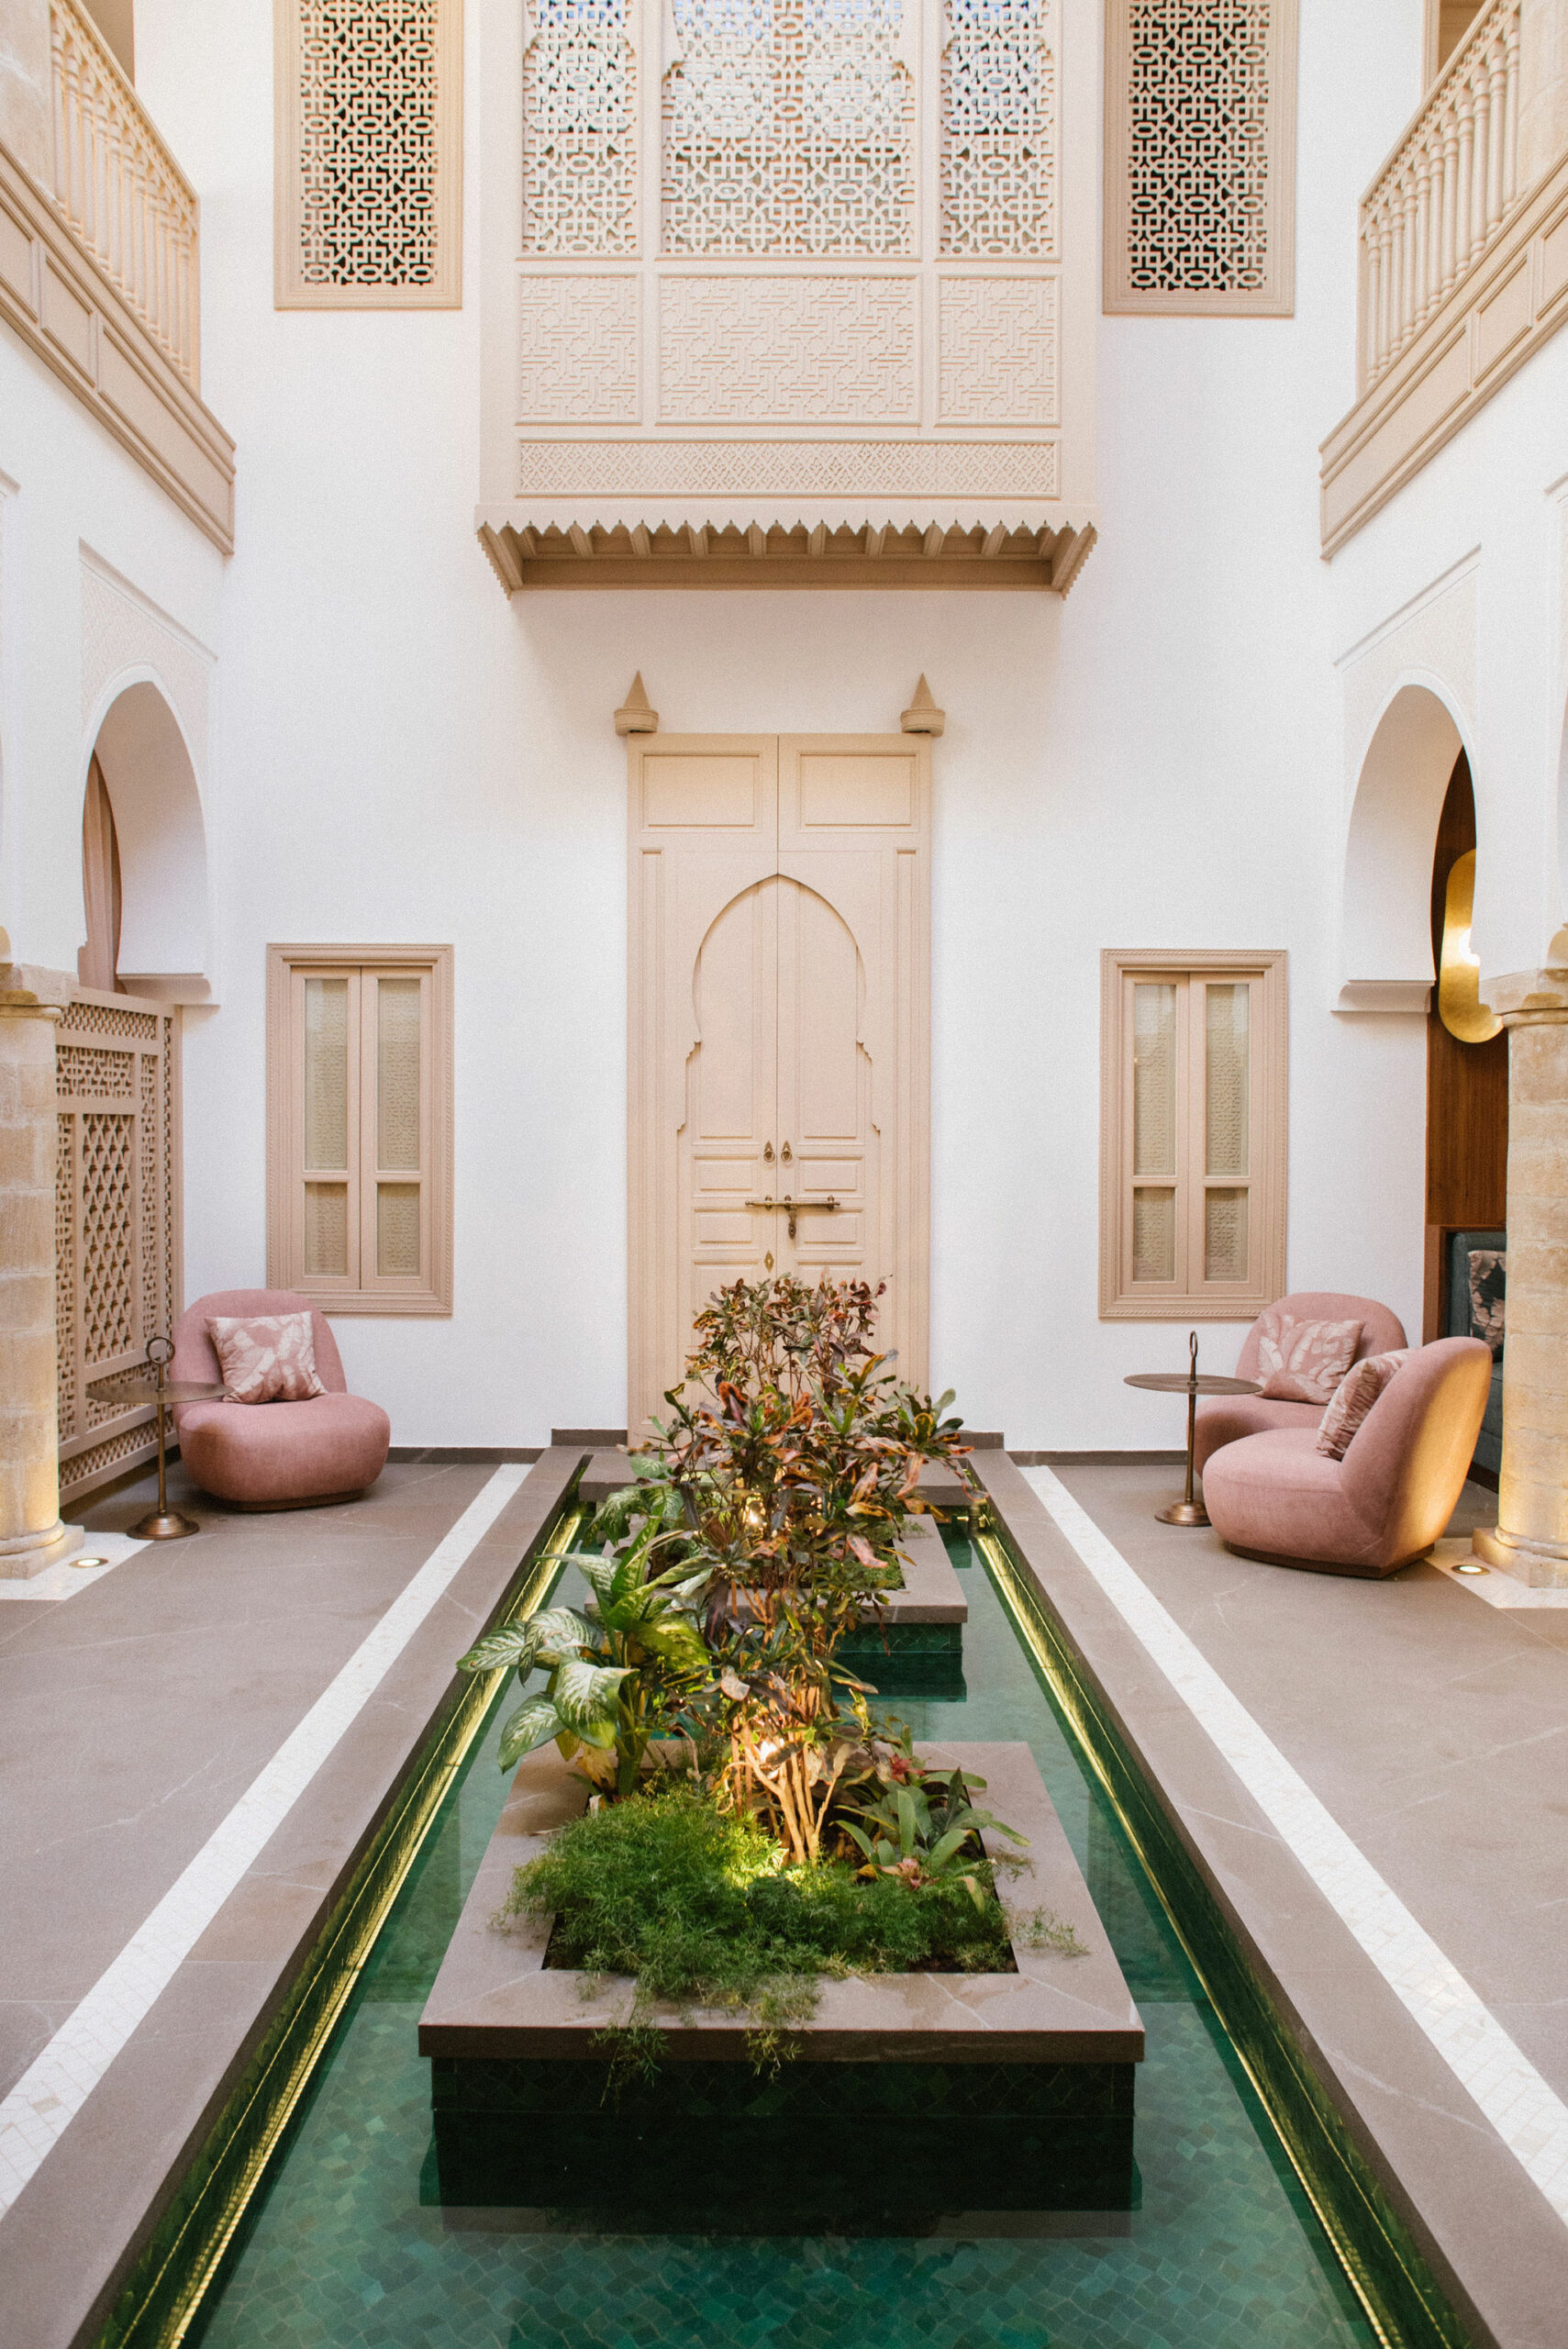 Patio bassin design et porte marocaine Riad Nyla Marrakech